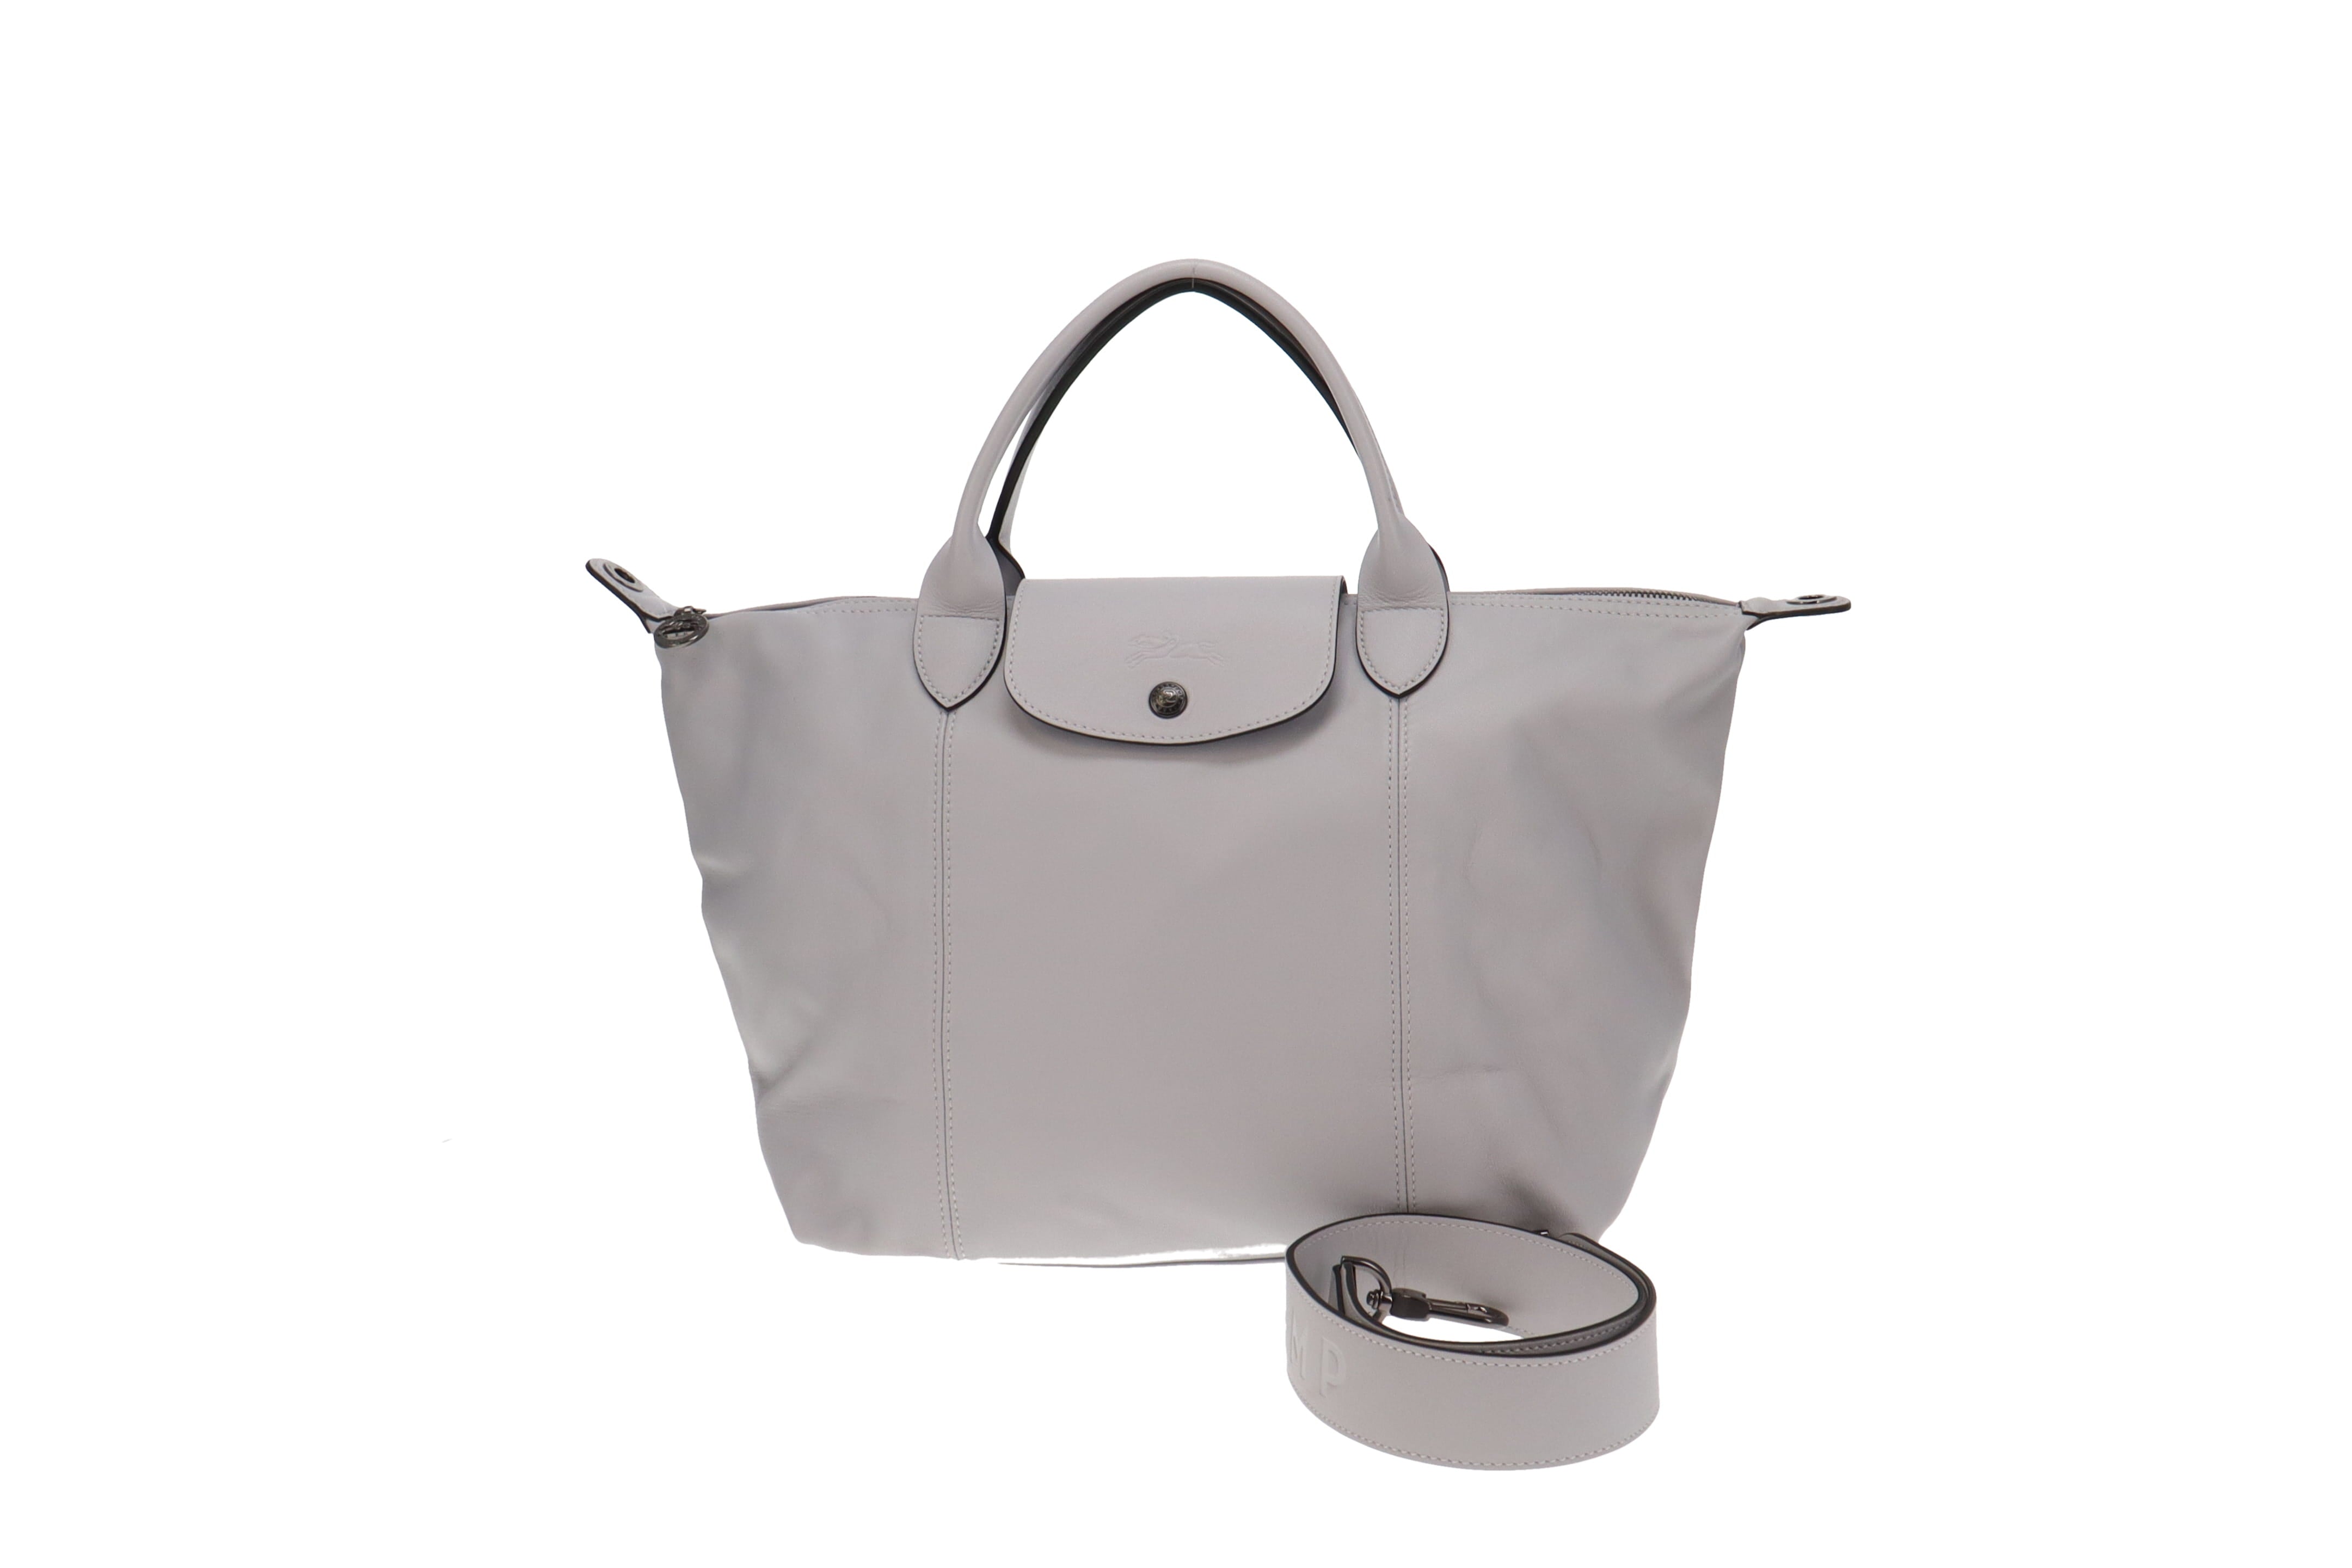 Longchamp Le Pliage Neo Bucket Nylon Bag ~NEW~ Blue India